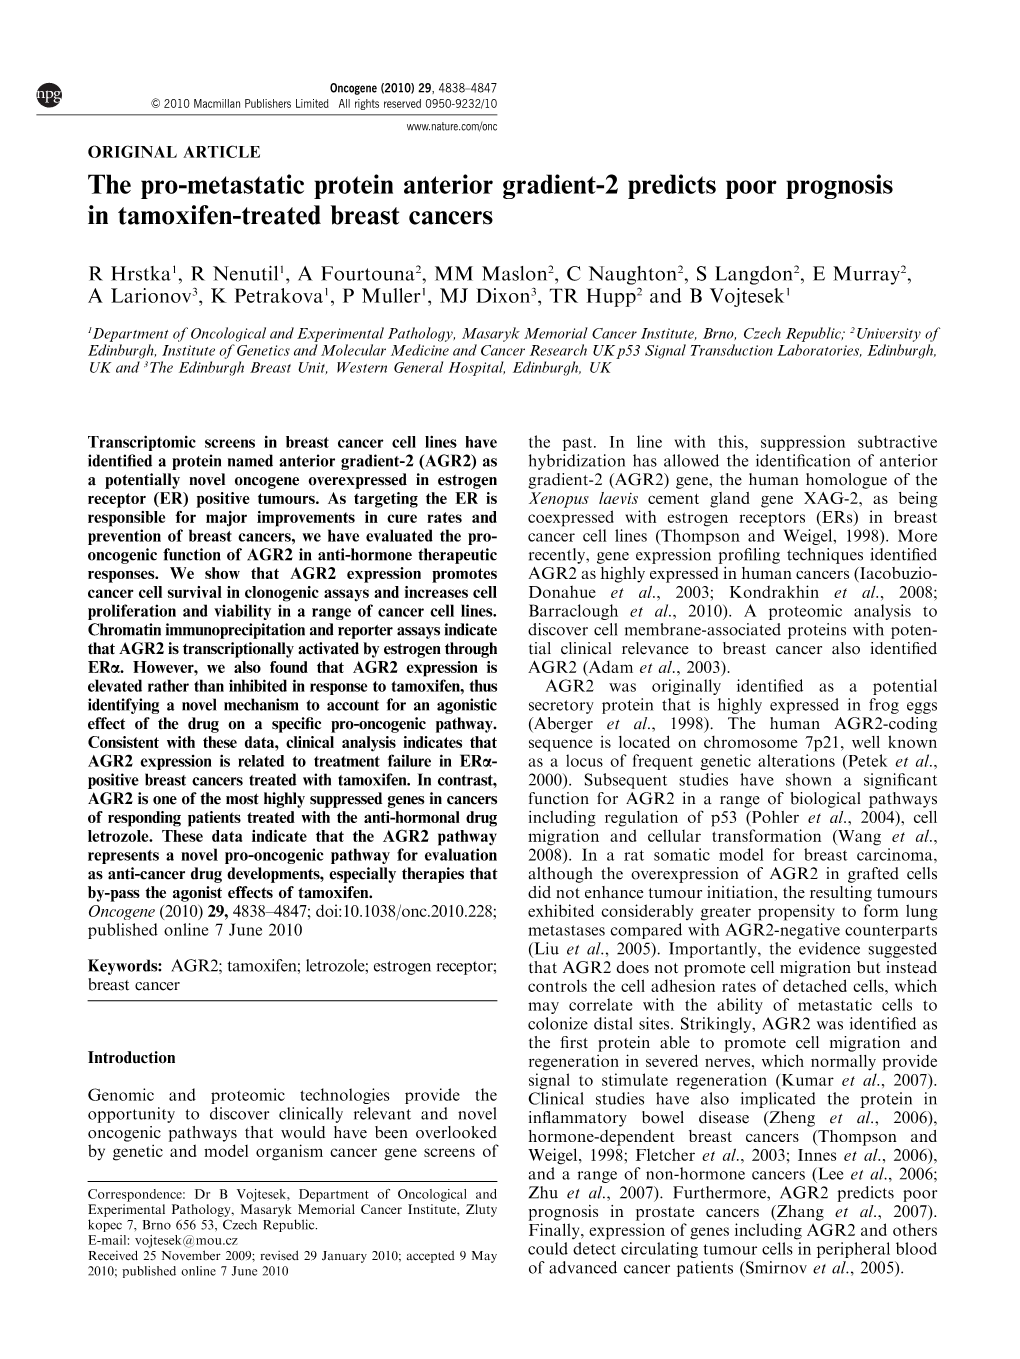 The Pro-Metastatic Protein Anterior Gradient-2 Predicts Poor Prognosis in Tamoxifen-Treated Breast Cancers